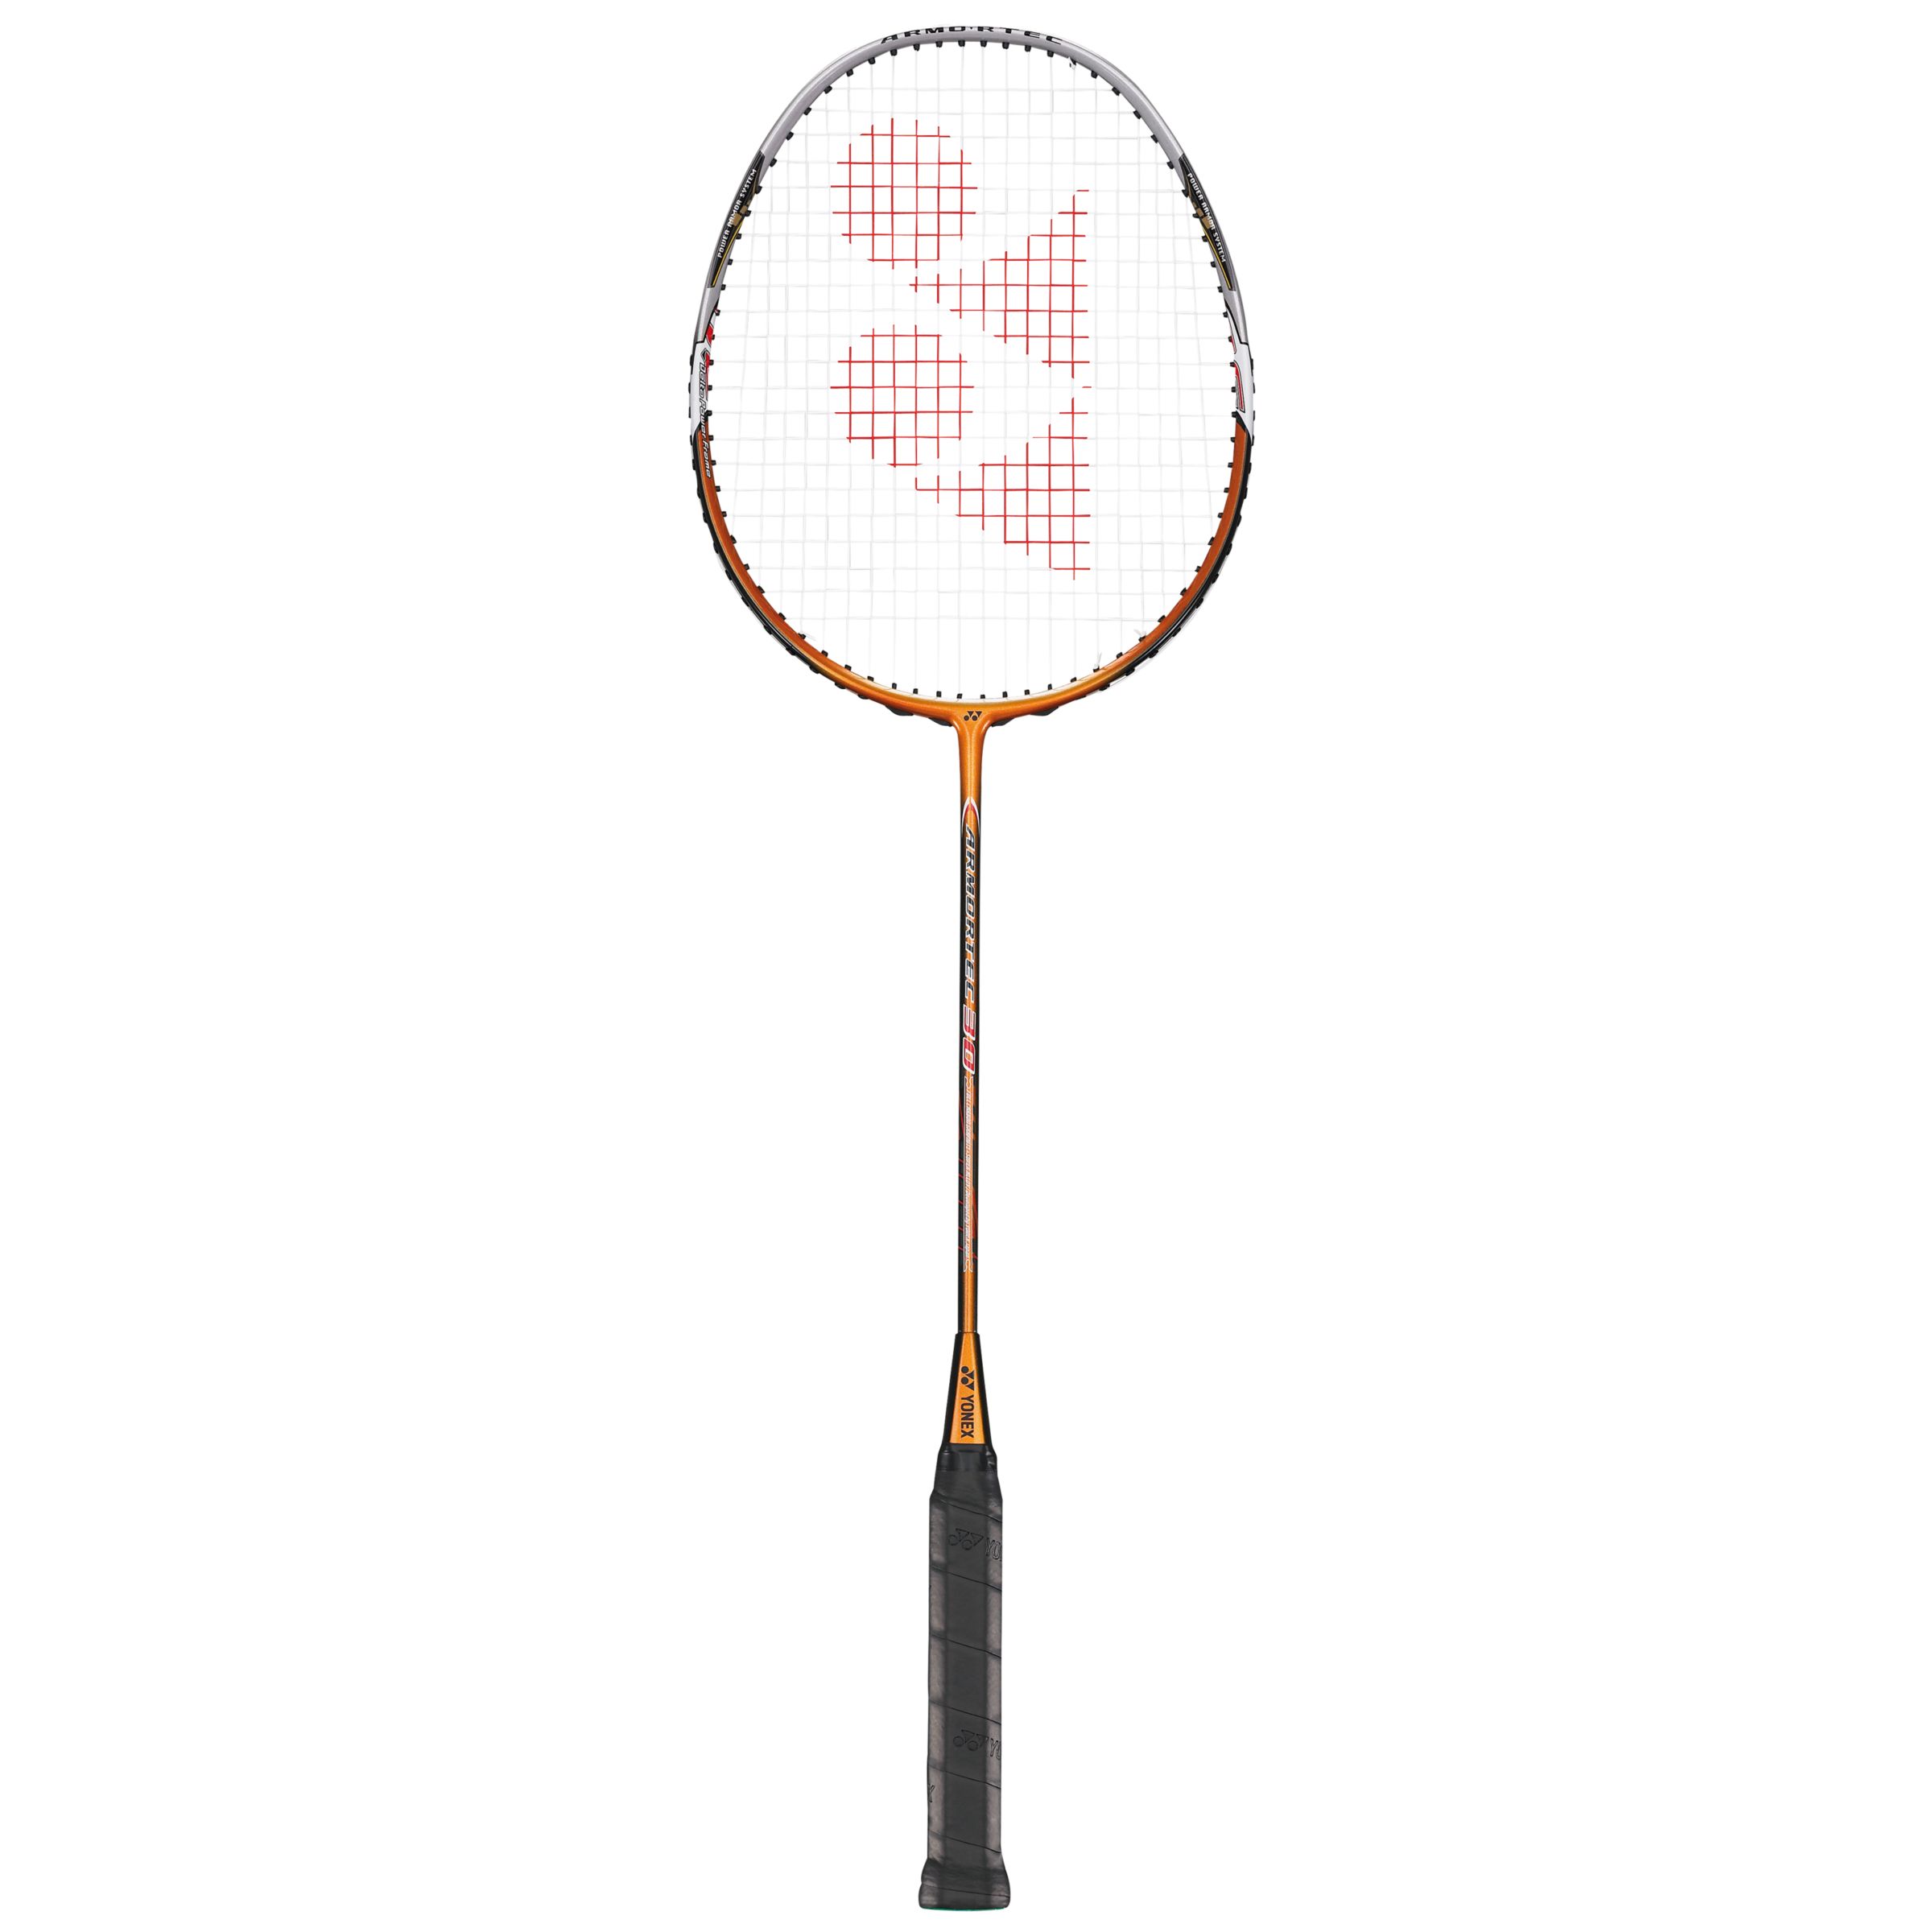 Amortec 30 Badminton Racket, Intermediate,